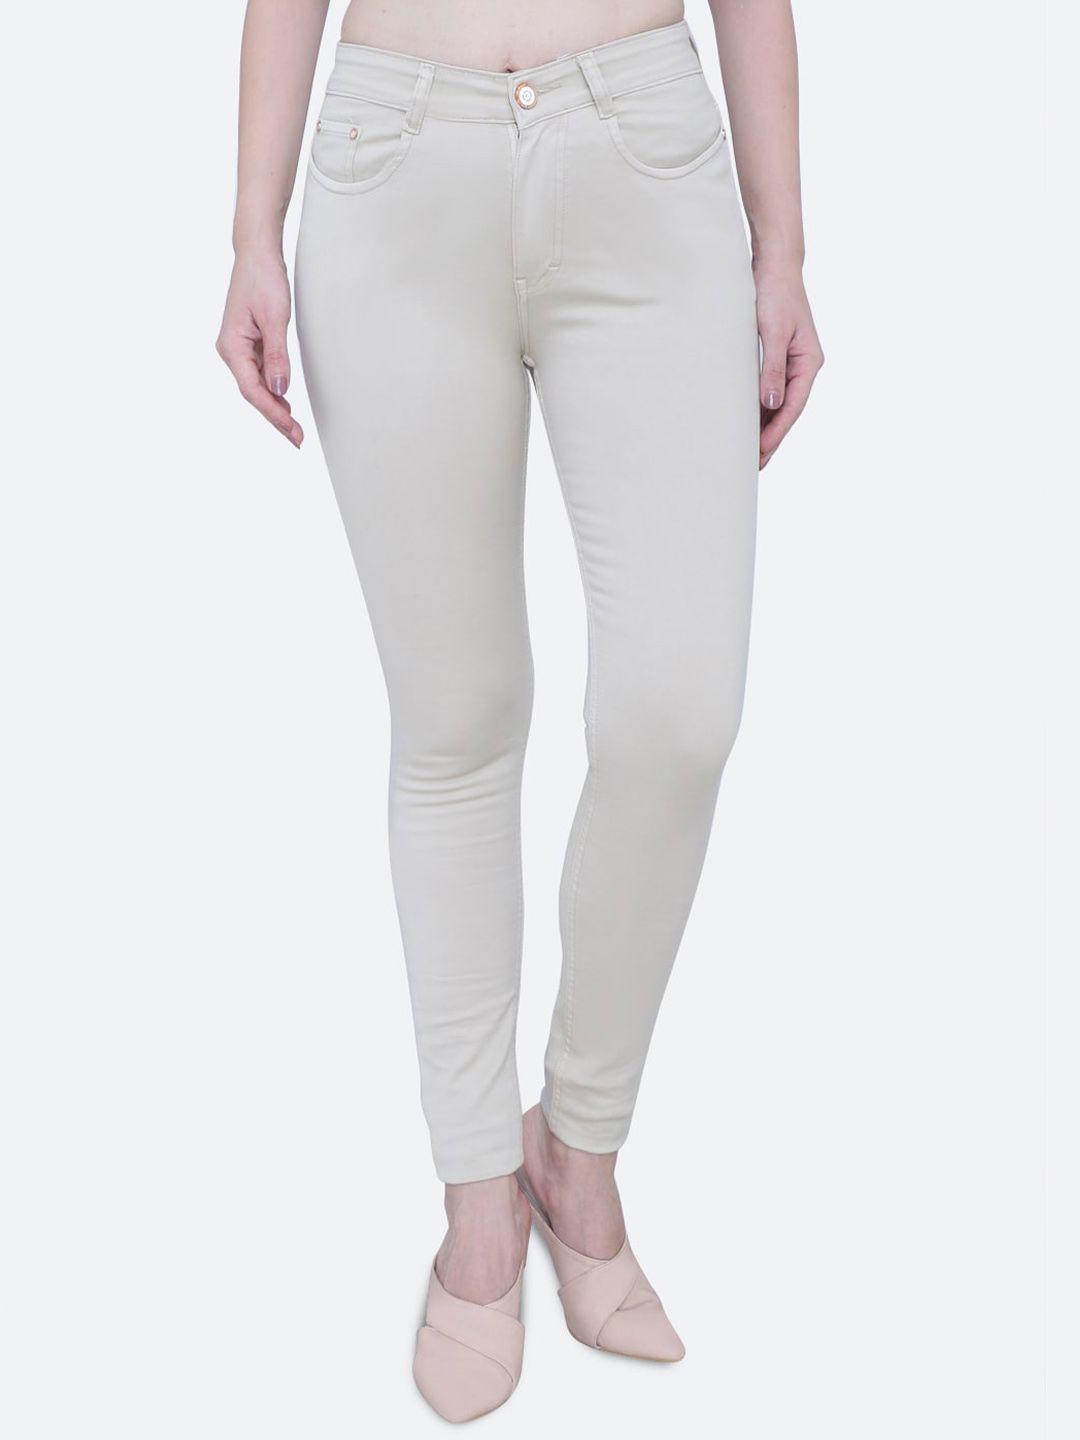 fck-3 women comfort high-rise stretchable jeans